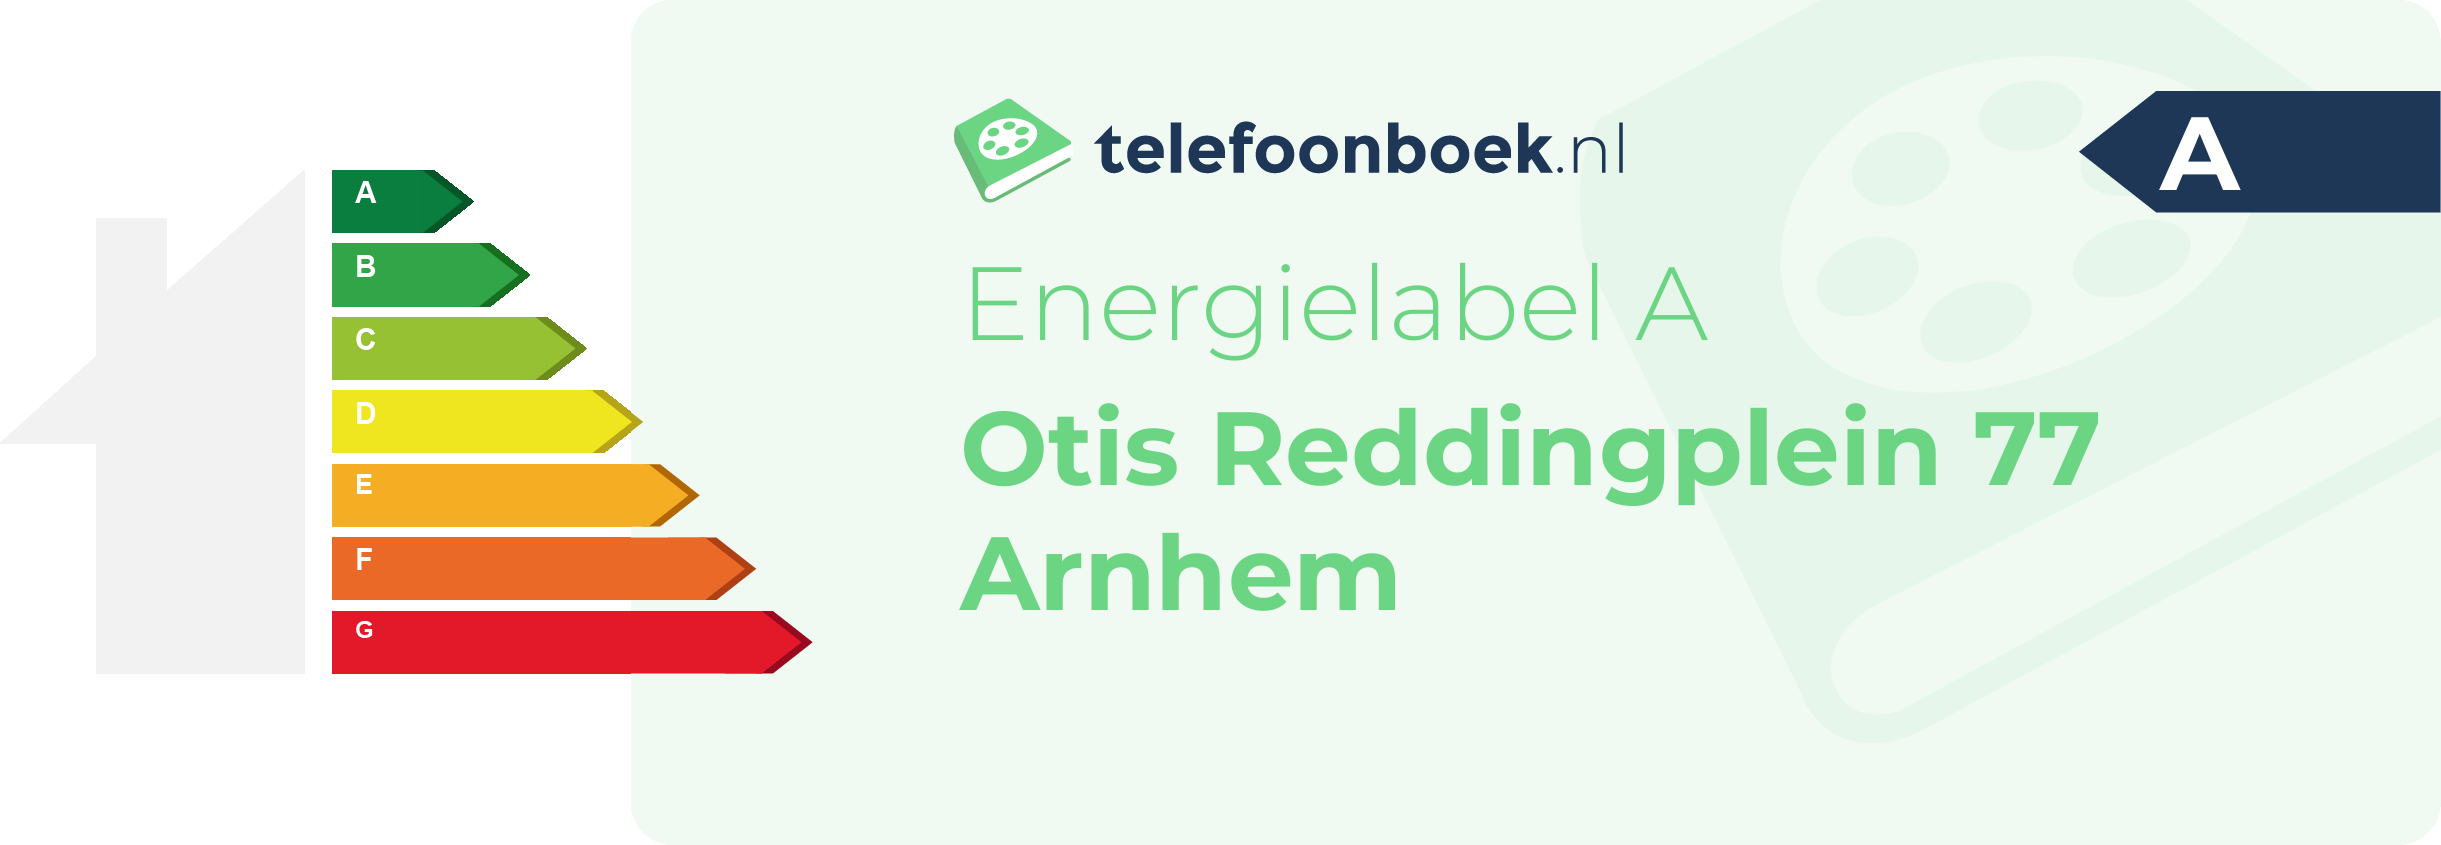 Energielabel Otis Reddingplein 77 Arnhem